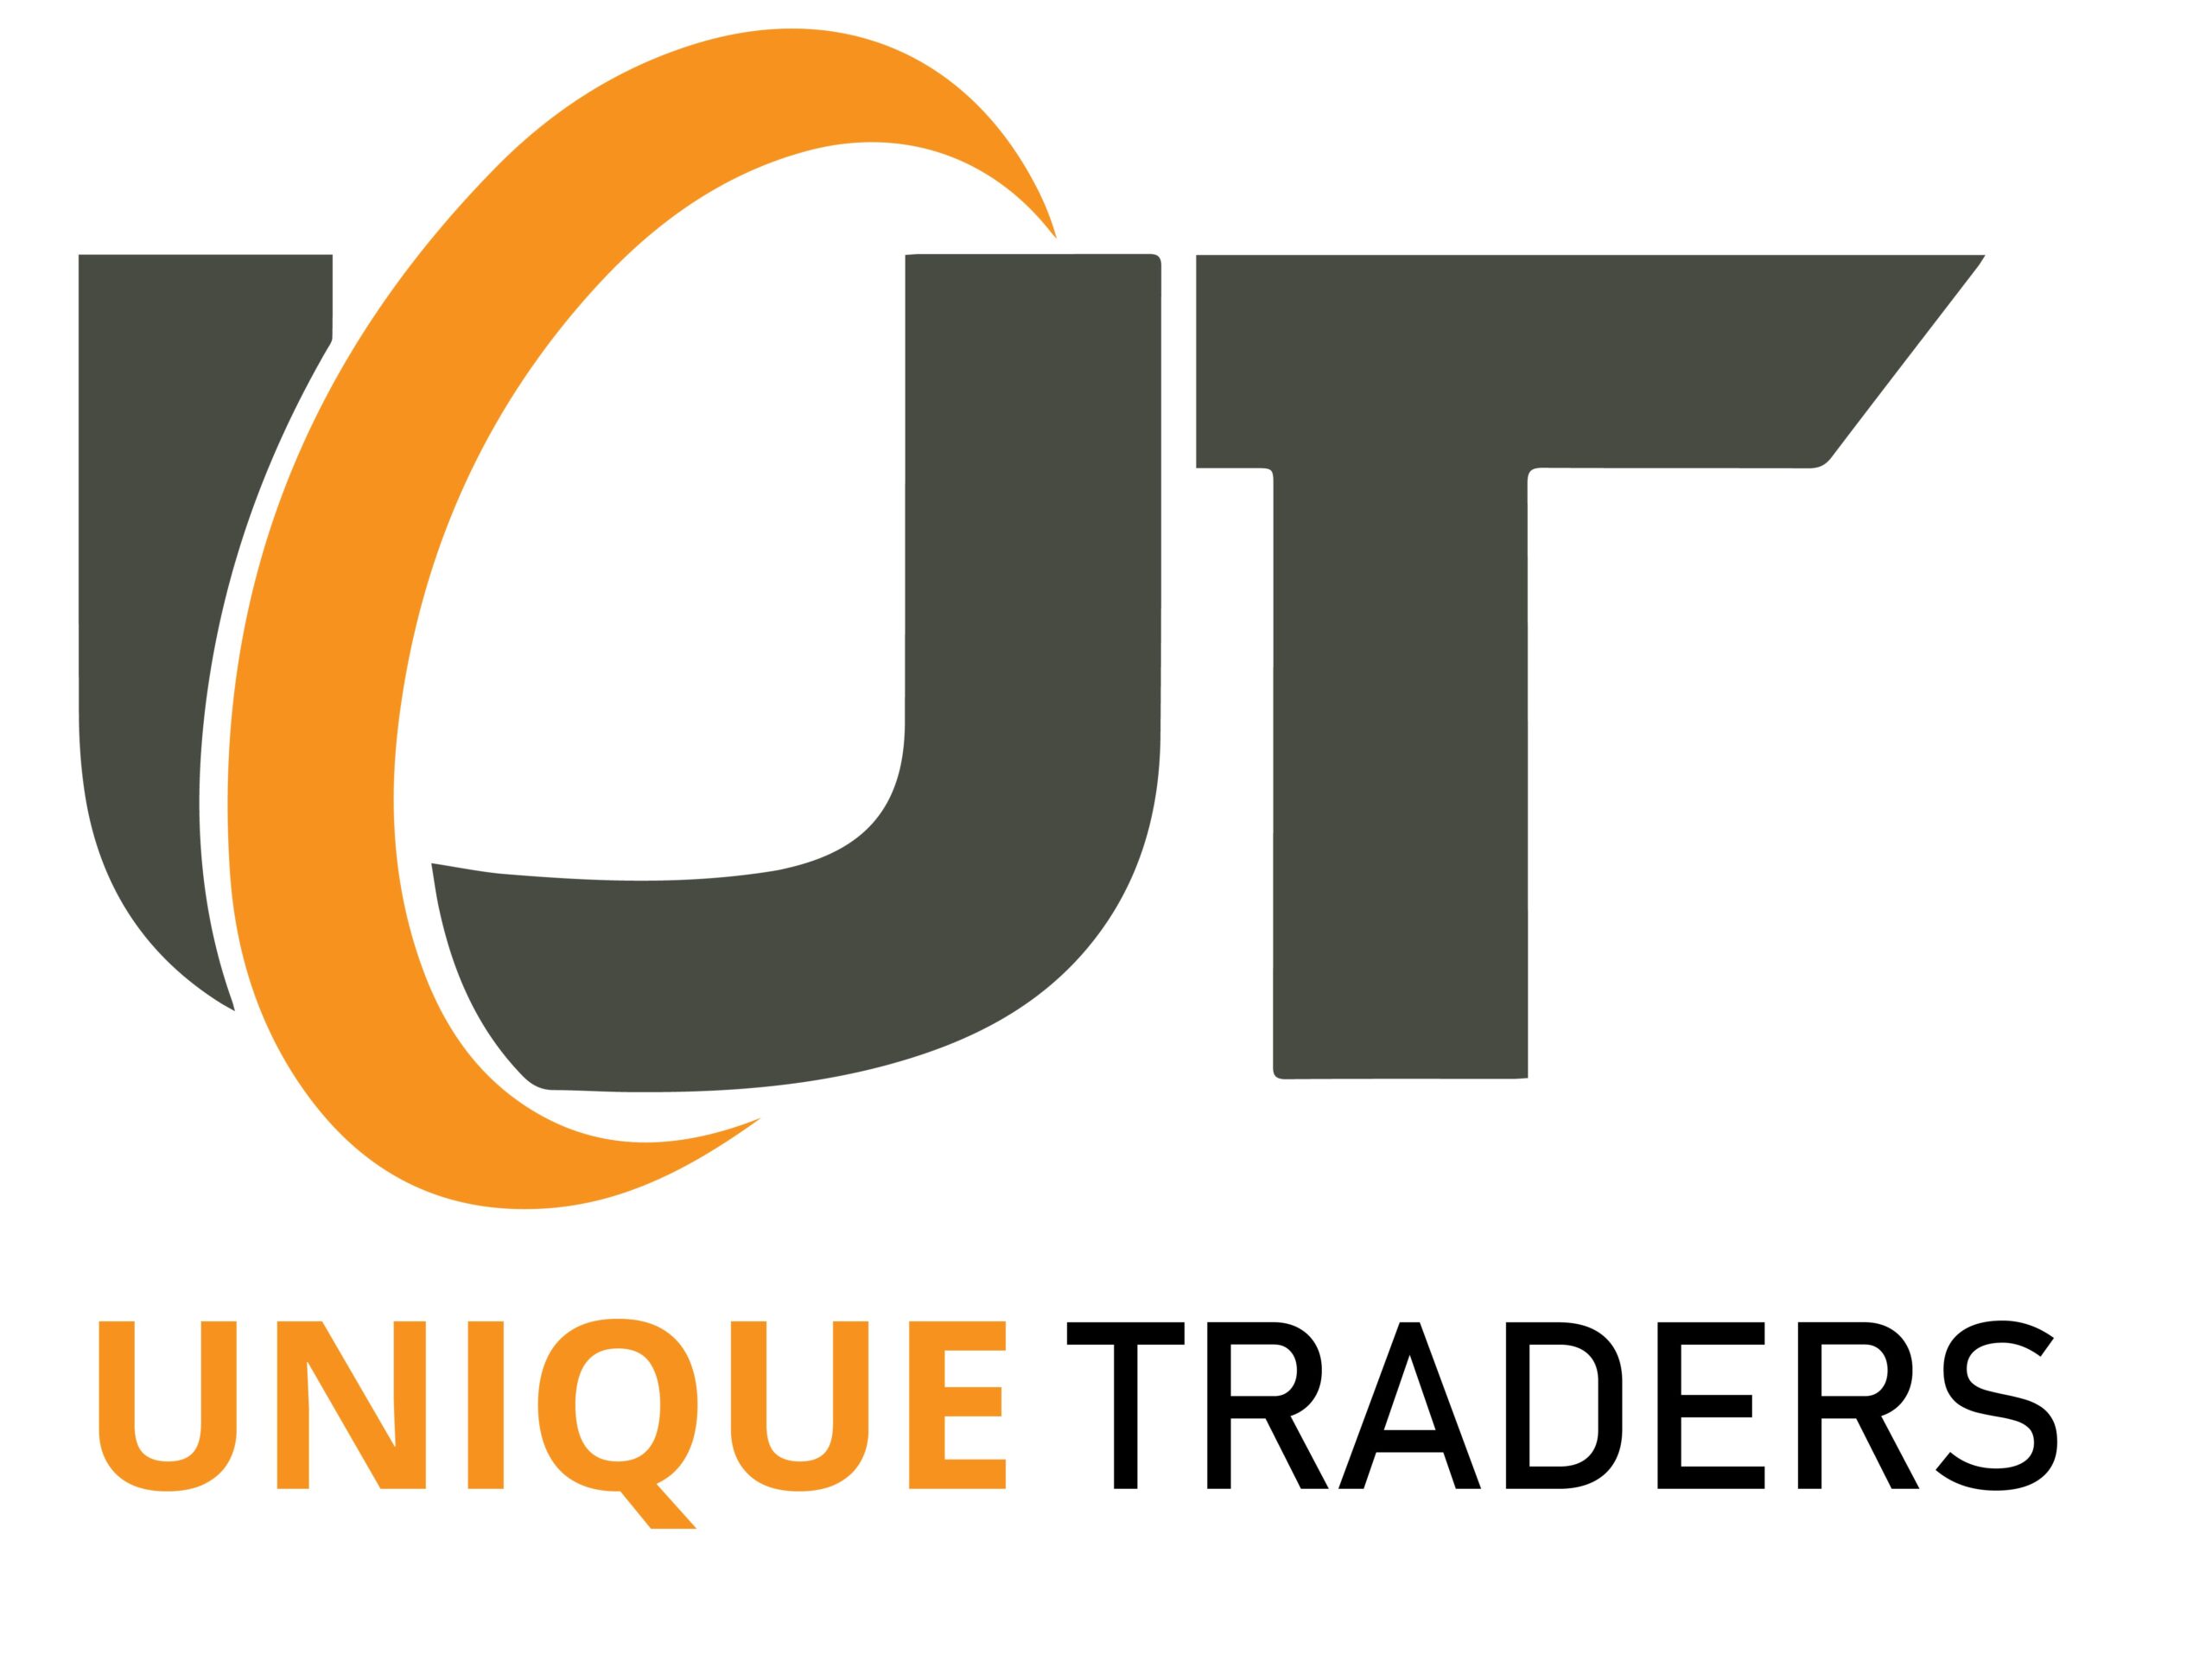 Unique Traders